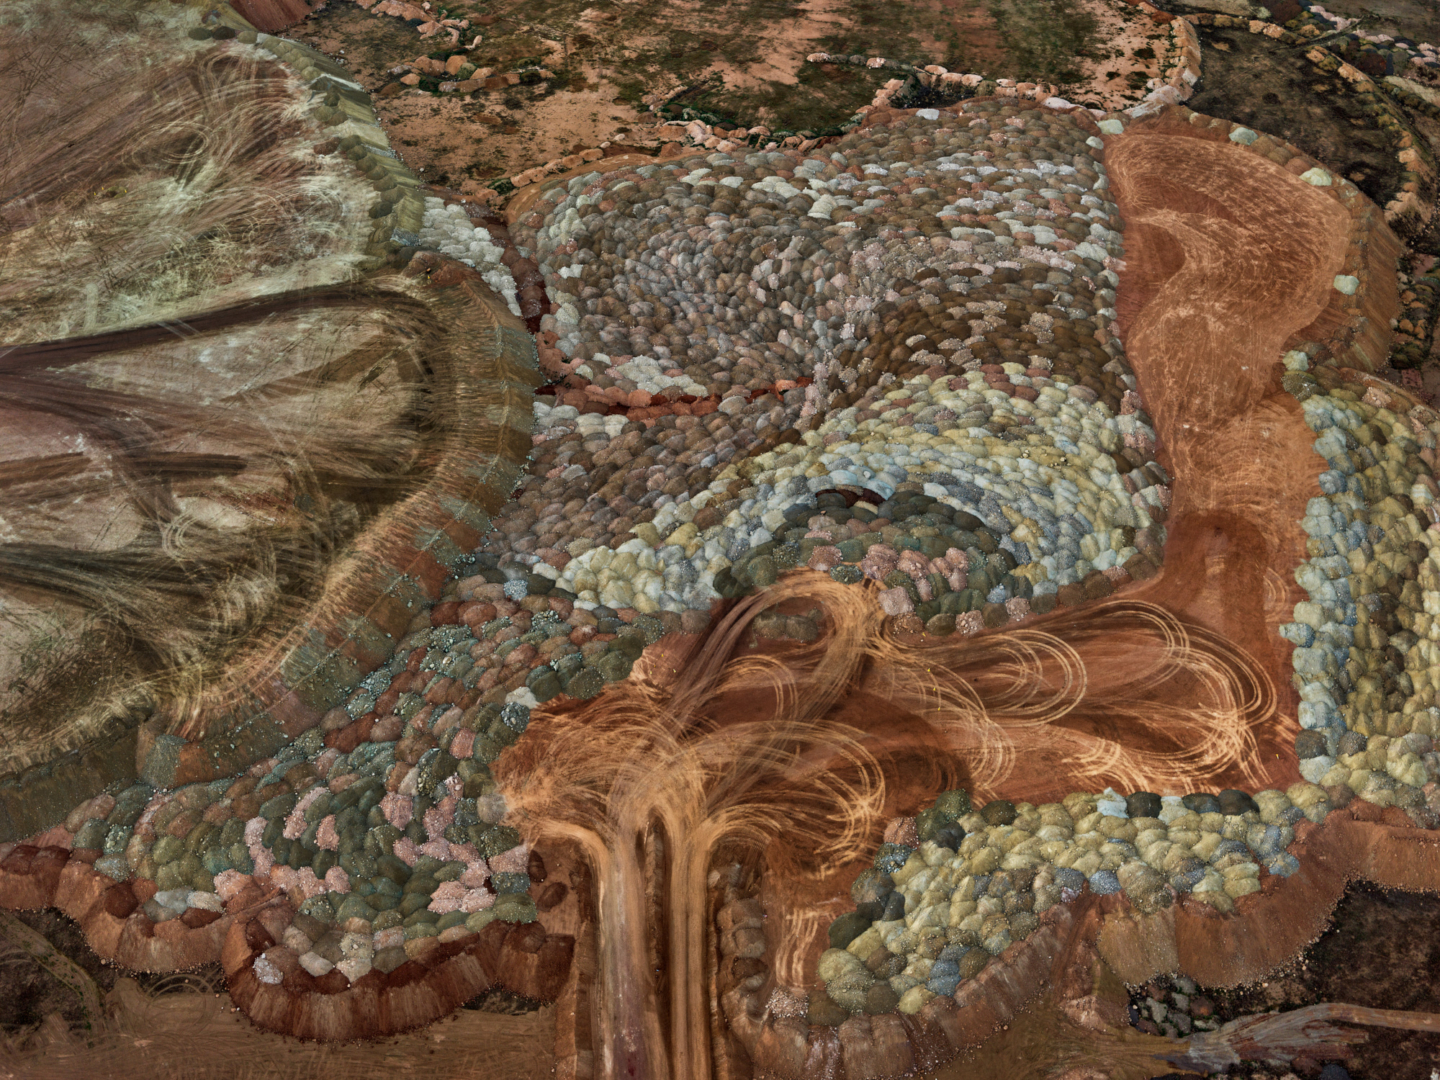 Sishen Iron Ore Mine #2, Overburden, Kathu, South Africa